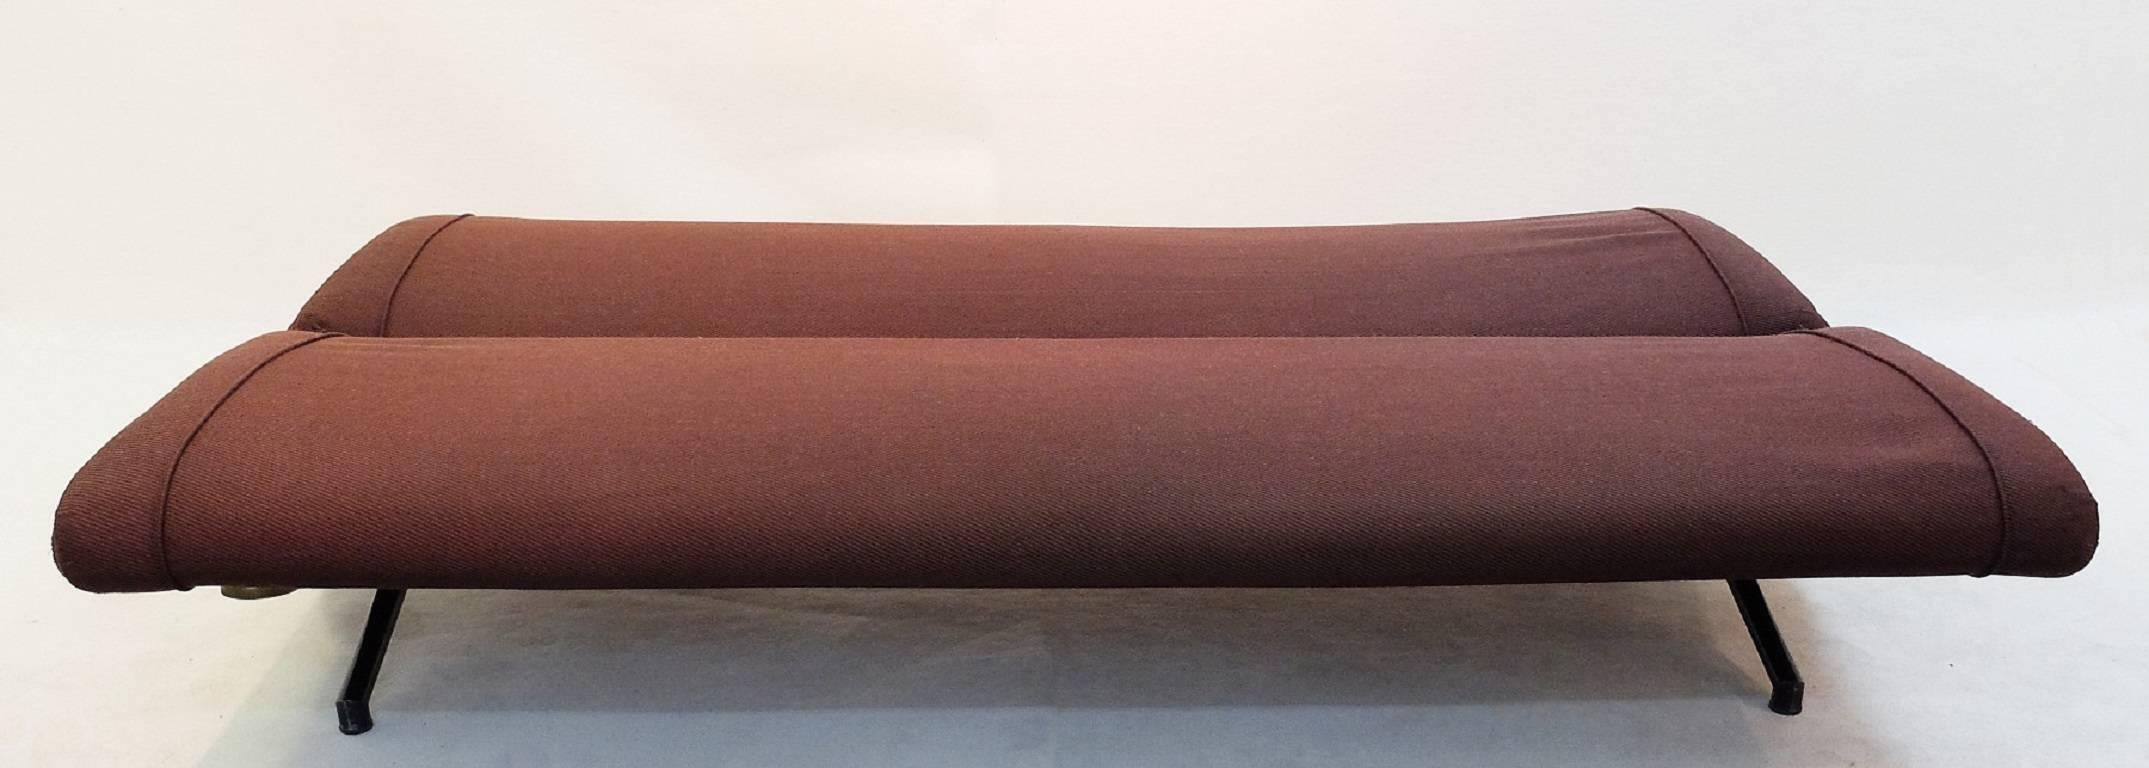 Mid-Century Modern Sofa Daybed D70 Designed by Osvaldo Borsani for Tecno For Sale